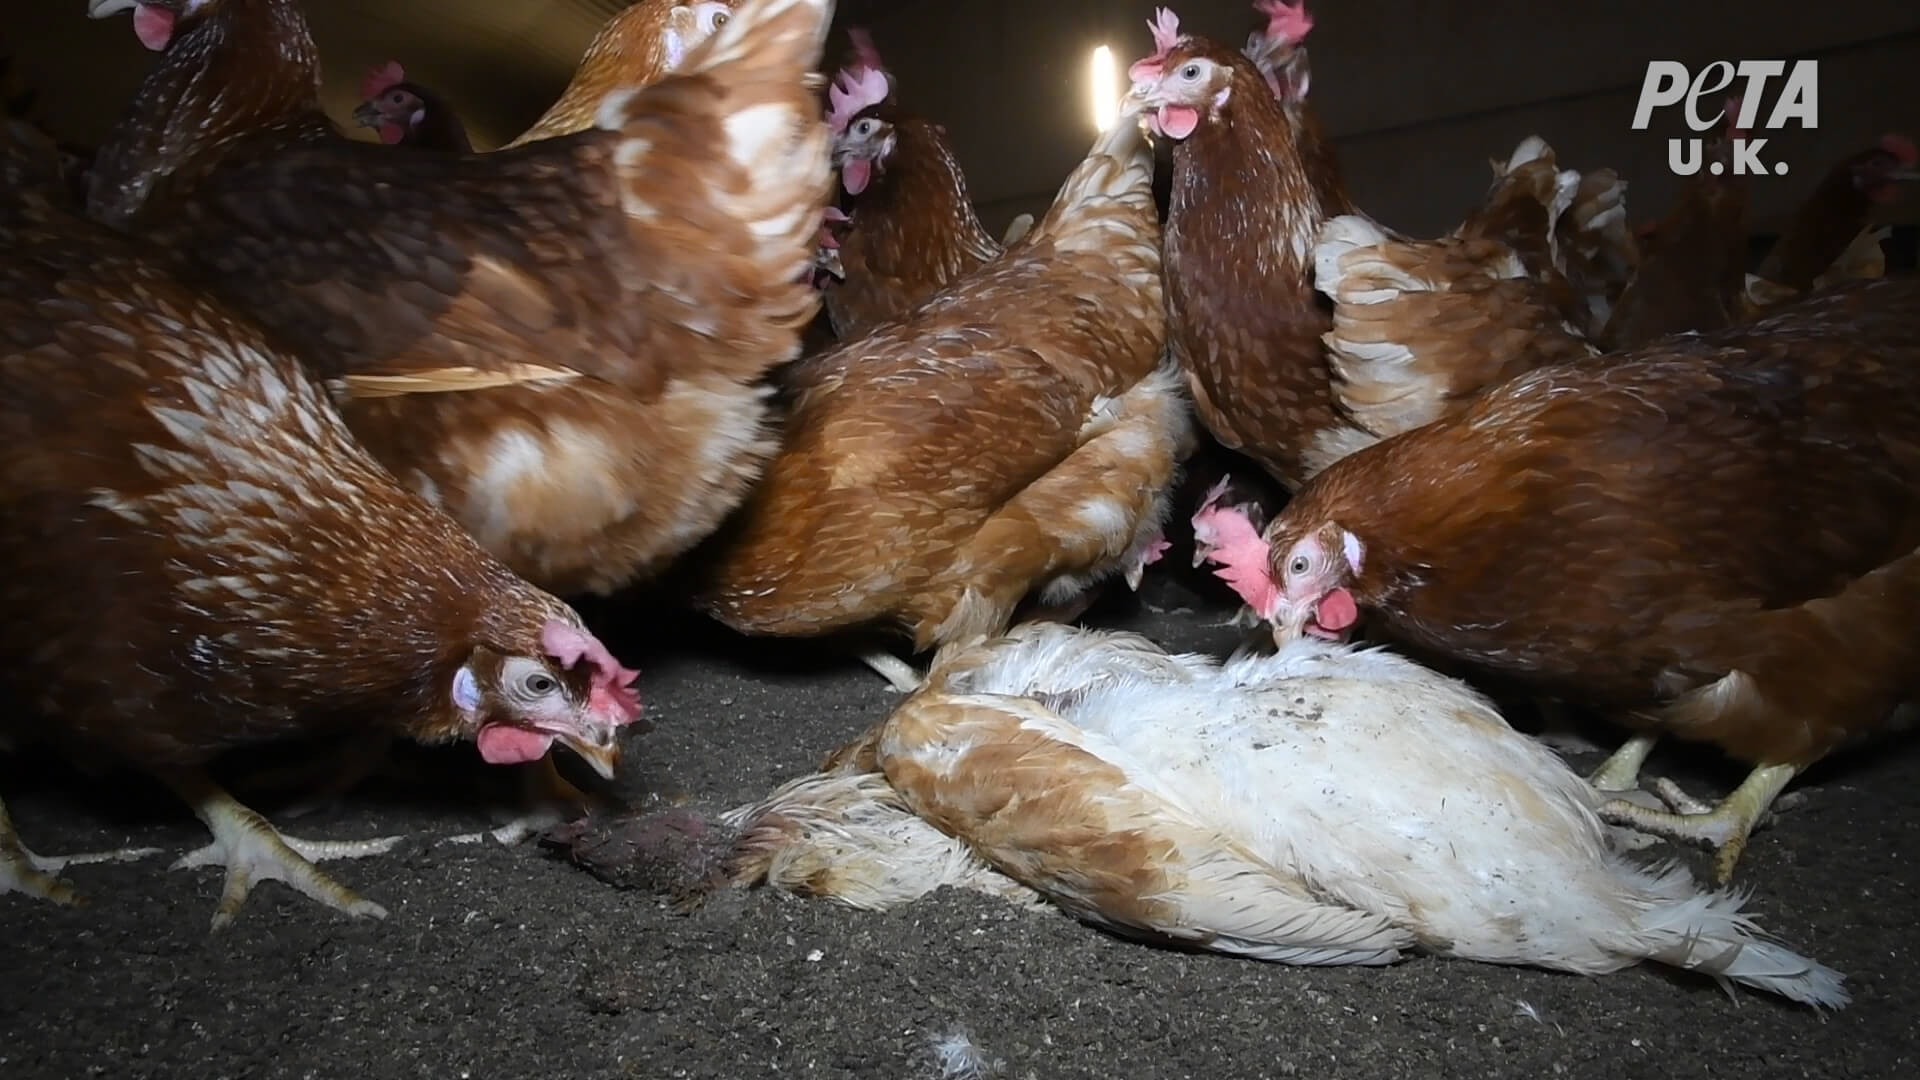 https://investigaciones.petalatino.com/wp-content/uploads/2021/02/VEG-UK-Happy-Egg-Investigation-Chickens-Hens-13.jpg